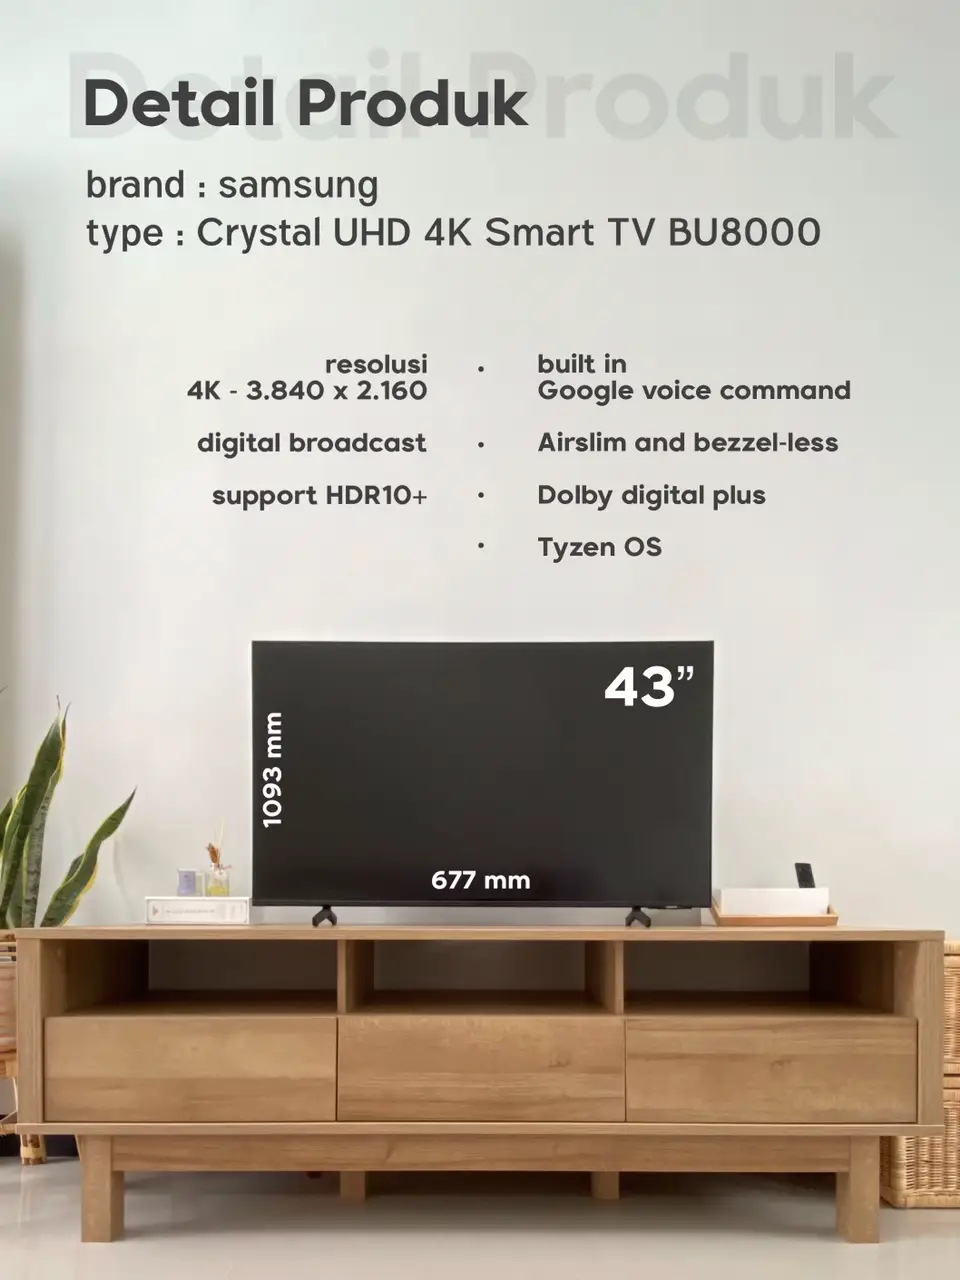 Xiaomi Perkenalkan Smart TV 100 Inci, Harga Rp 30 Jutaan